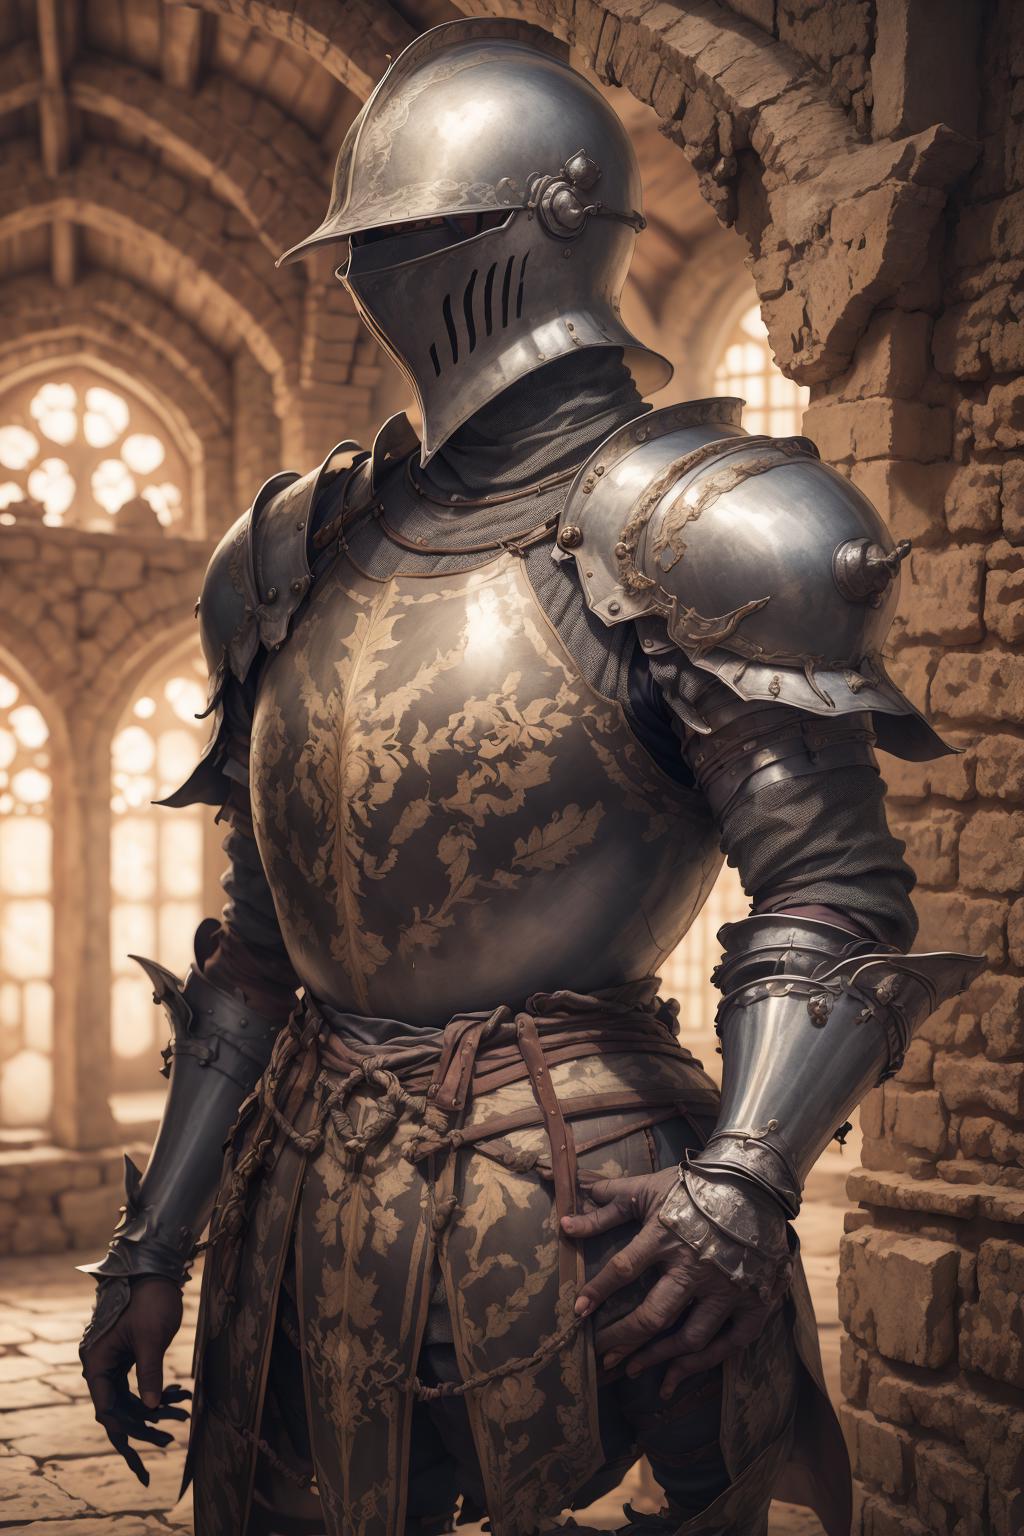 Medieval Style Armor Suit(中世纪风格铠甲套装) LoRa image by axebro